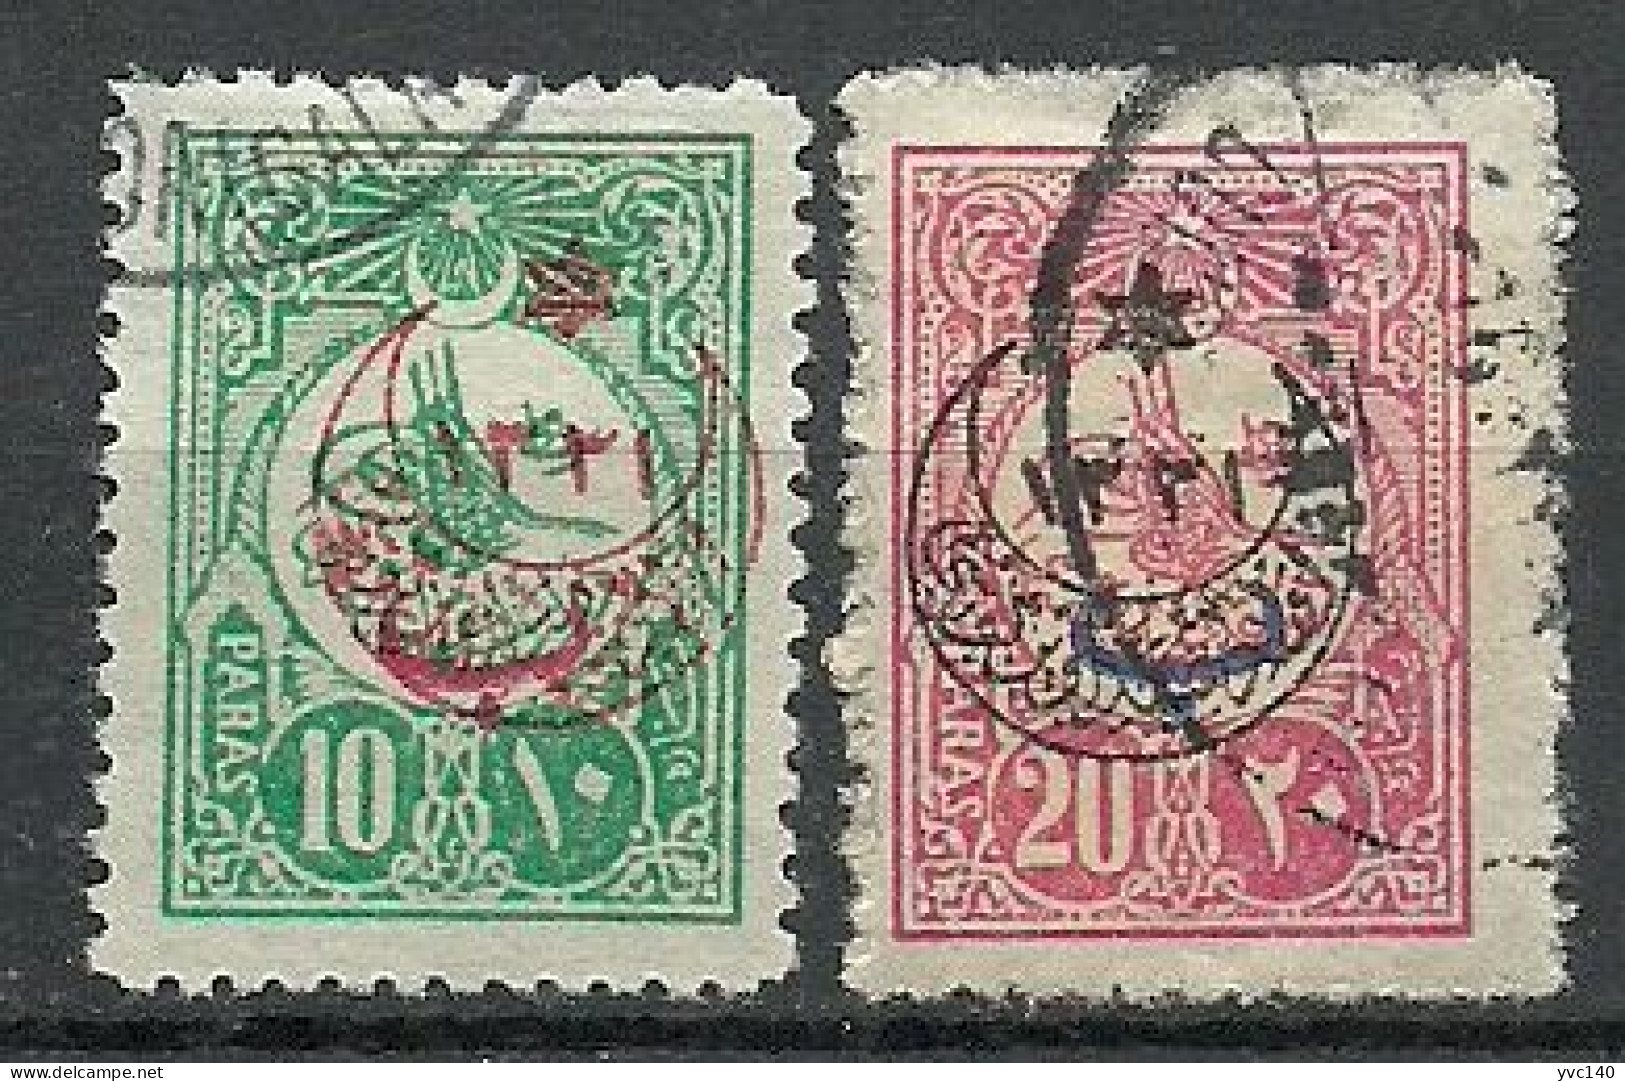 Turkey; 1915 Overprinted War Issue Stamps - Oblitérés